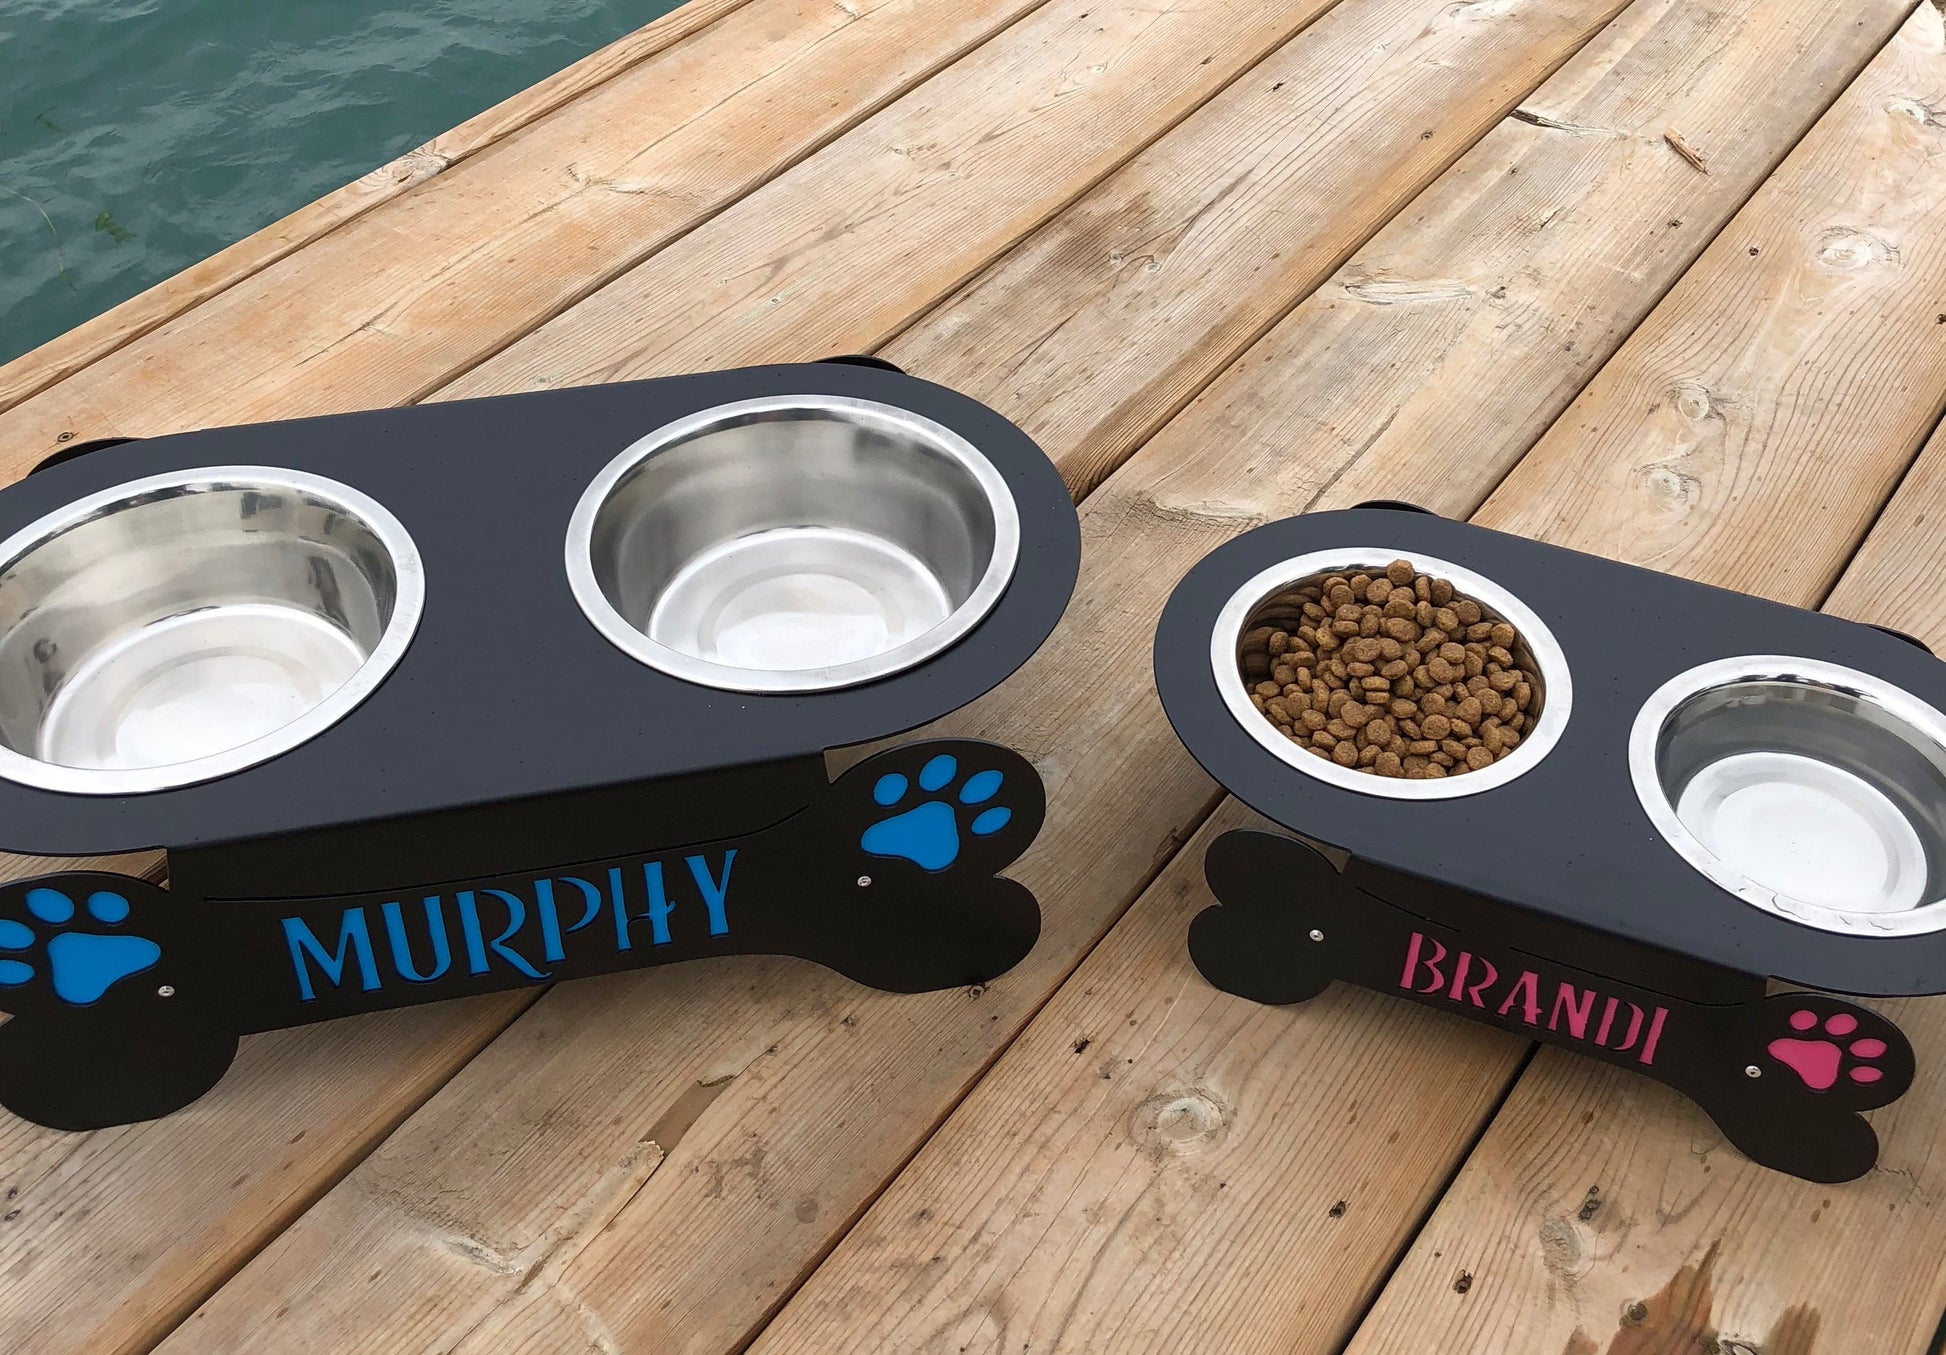 Medium and Large personalized steel dog bowl